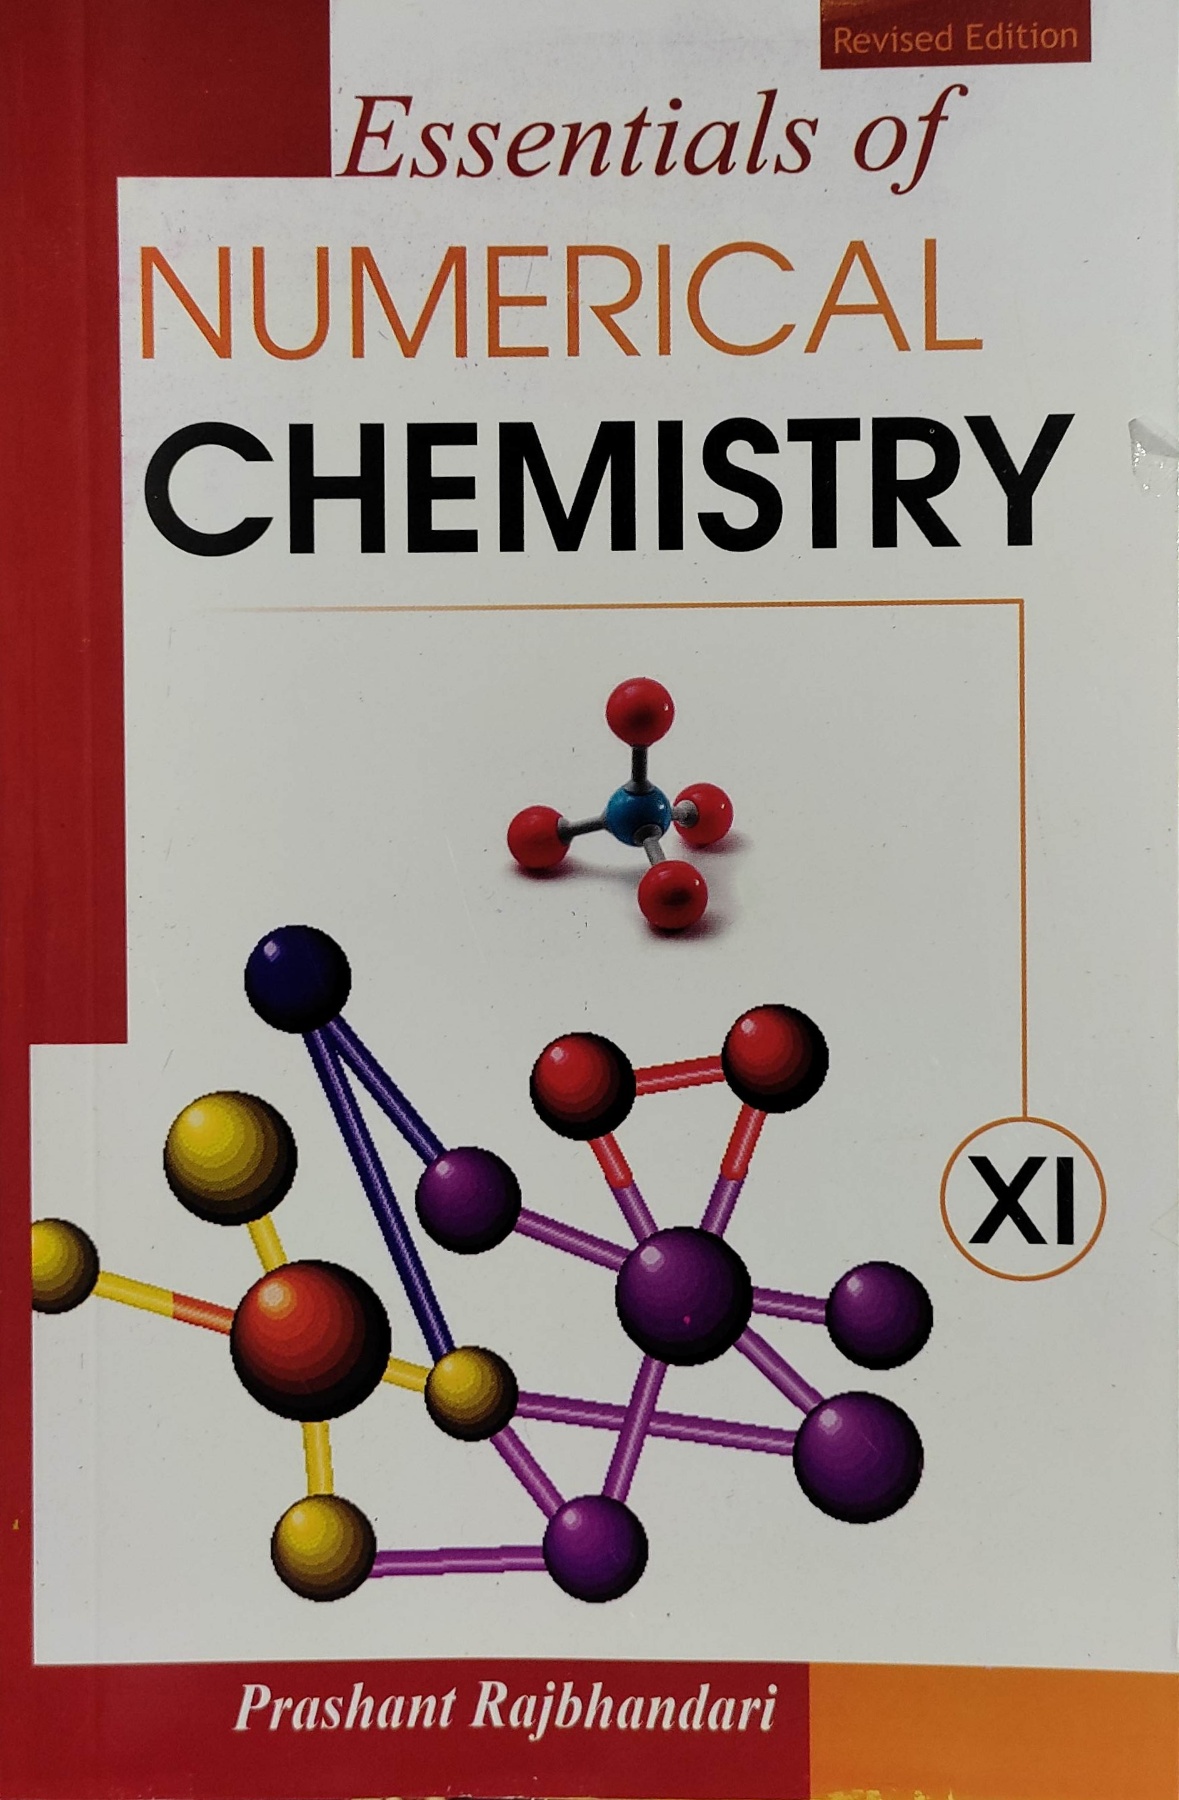 Essentials of Numerical Chemistry